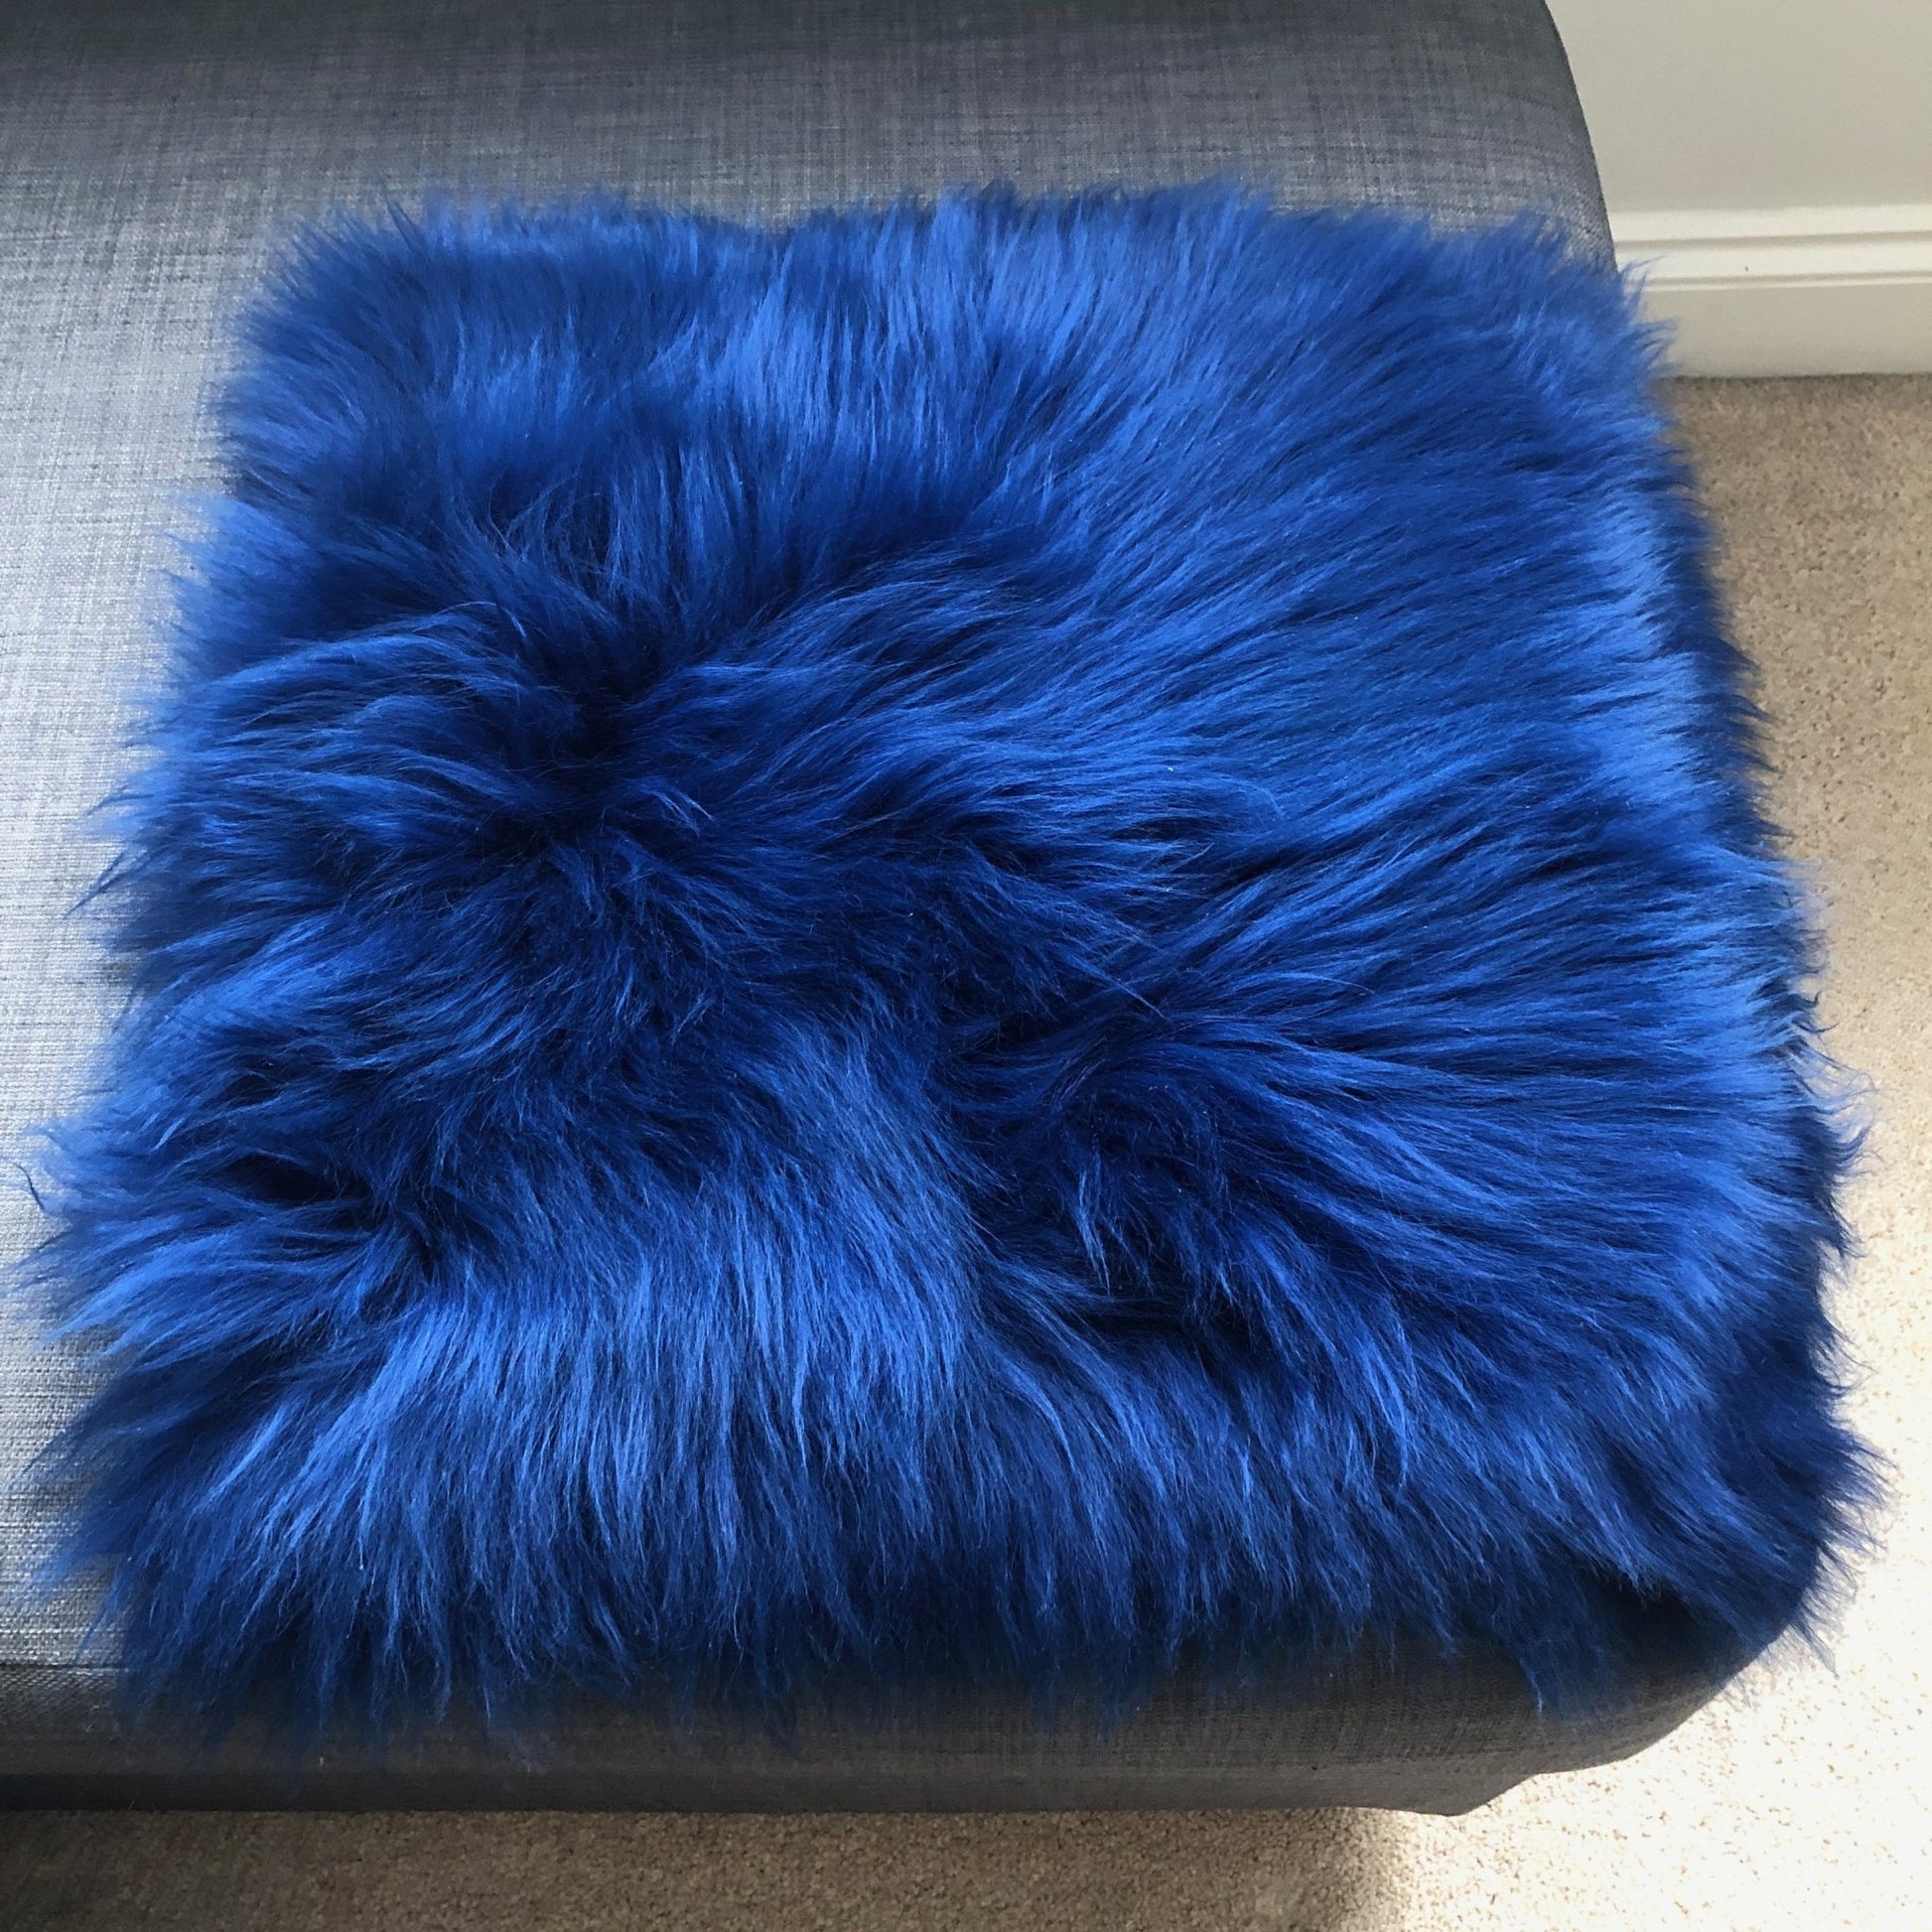 Swedish Sheepskin Square Seat Cover 37cm Bright Navy Blue - Wildash London